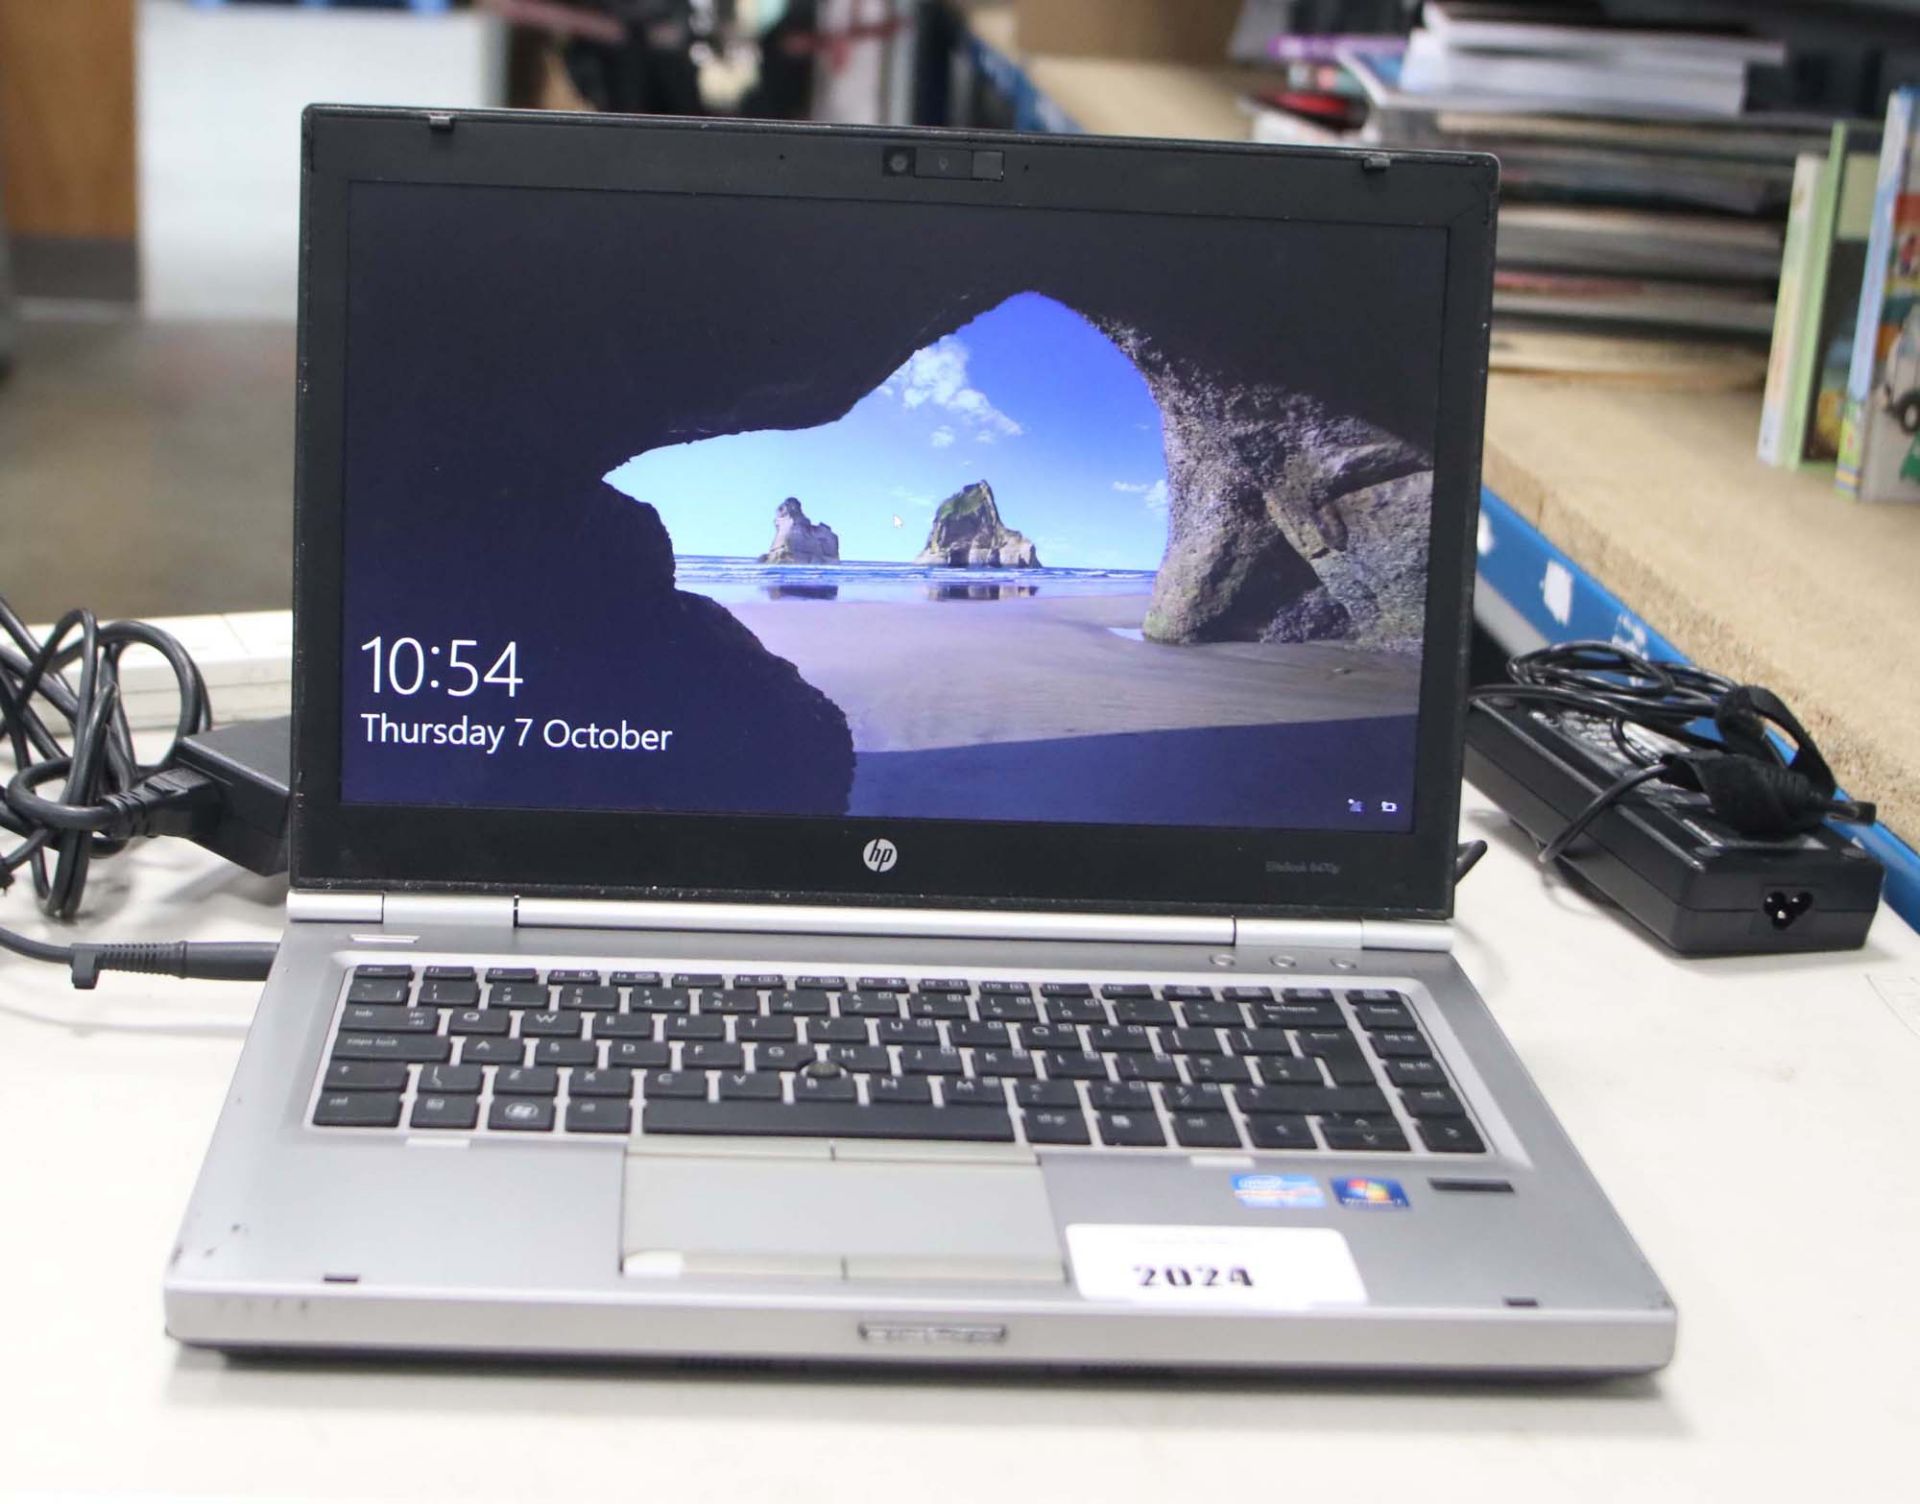 2047 - HP Elitebook 8470P laptop, Intel core i5 3rd gen processor, 4gb ram, 500gb storage, Windows